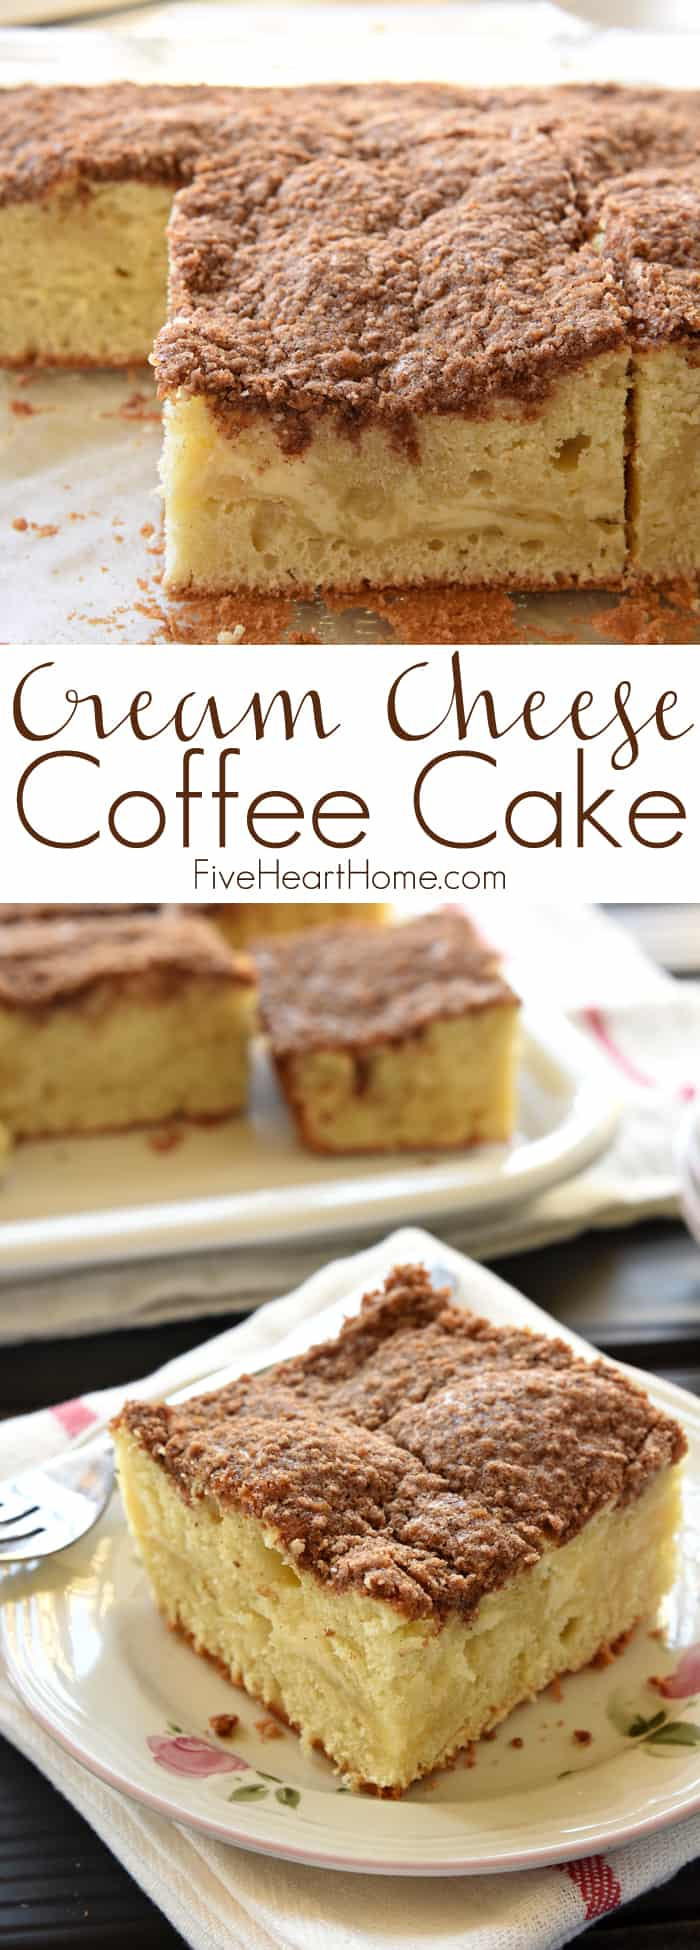 Cream Cheese Coffee Cake Recipe
 Cream Cheese Coffee Cake with Cinnamon Streusel Topping